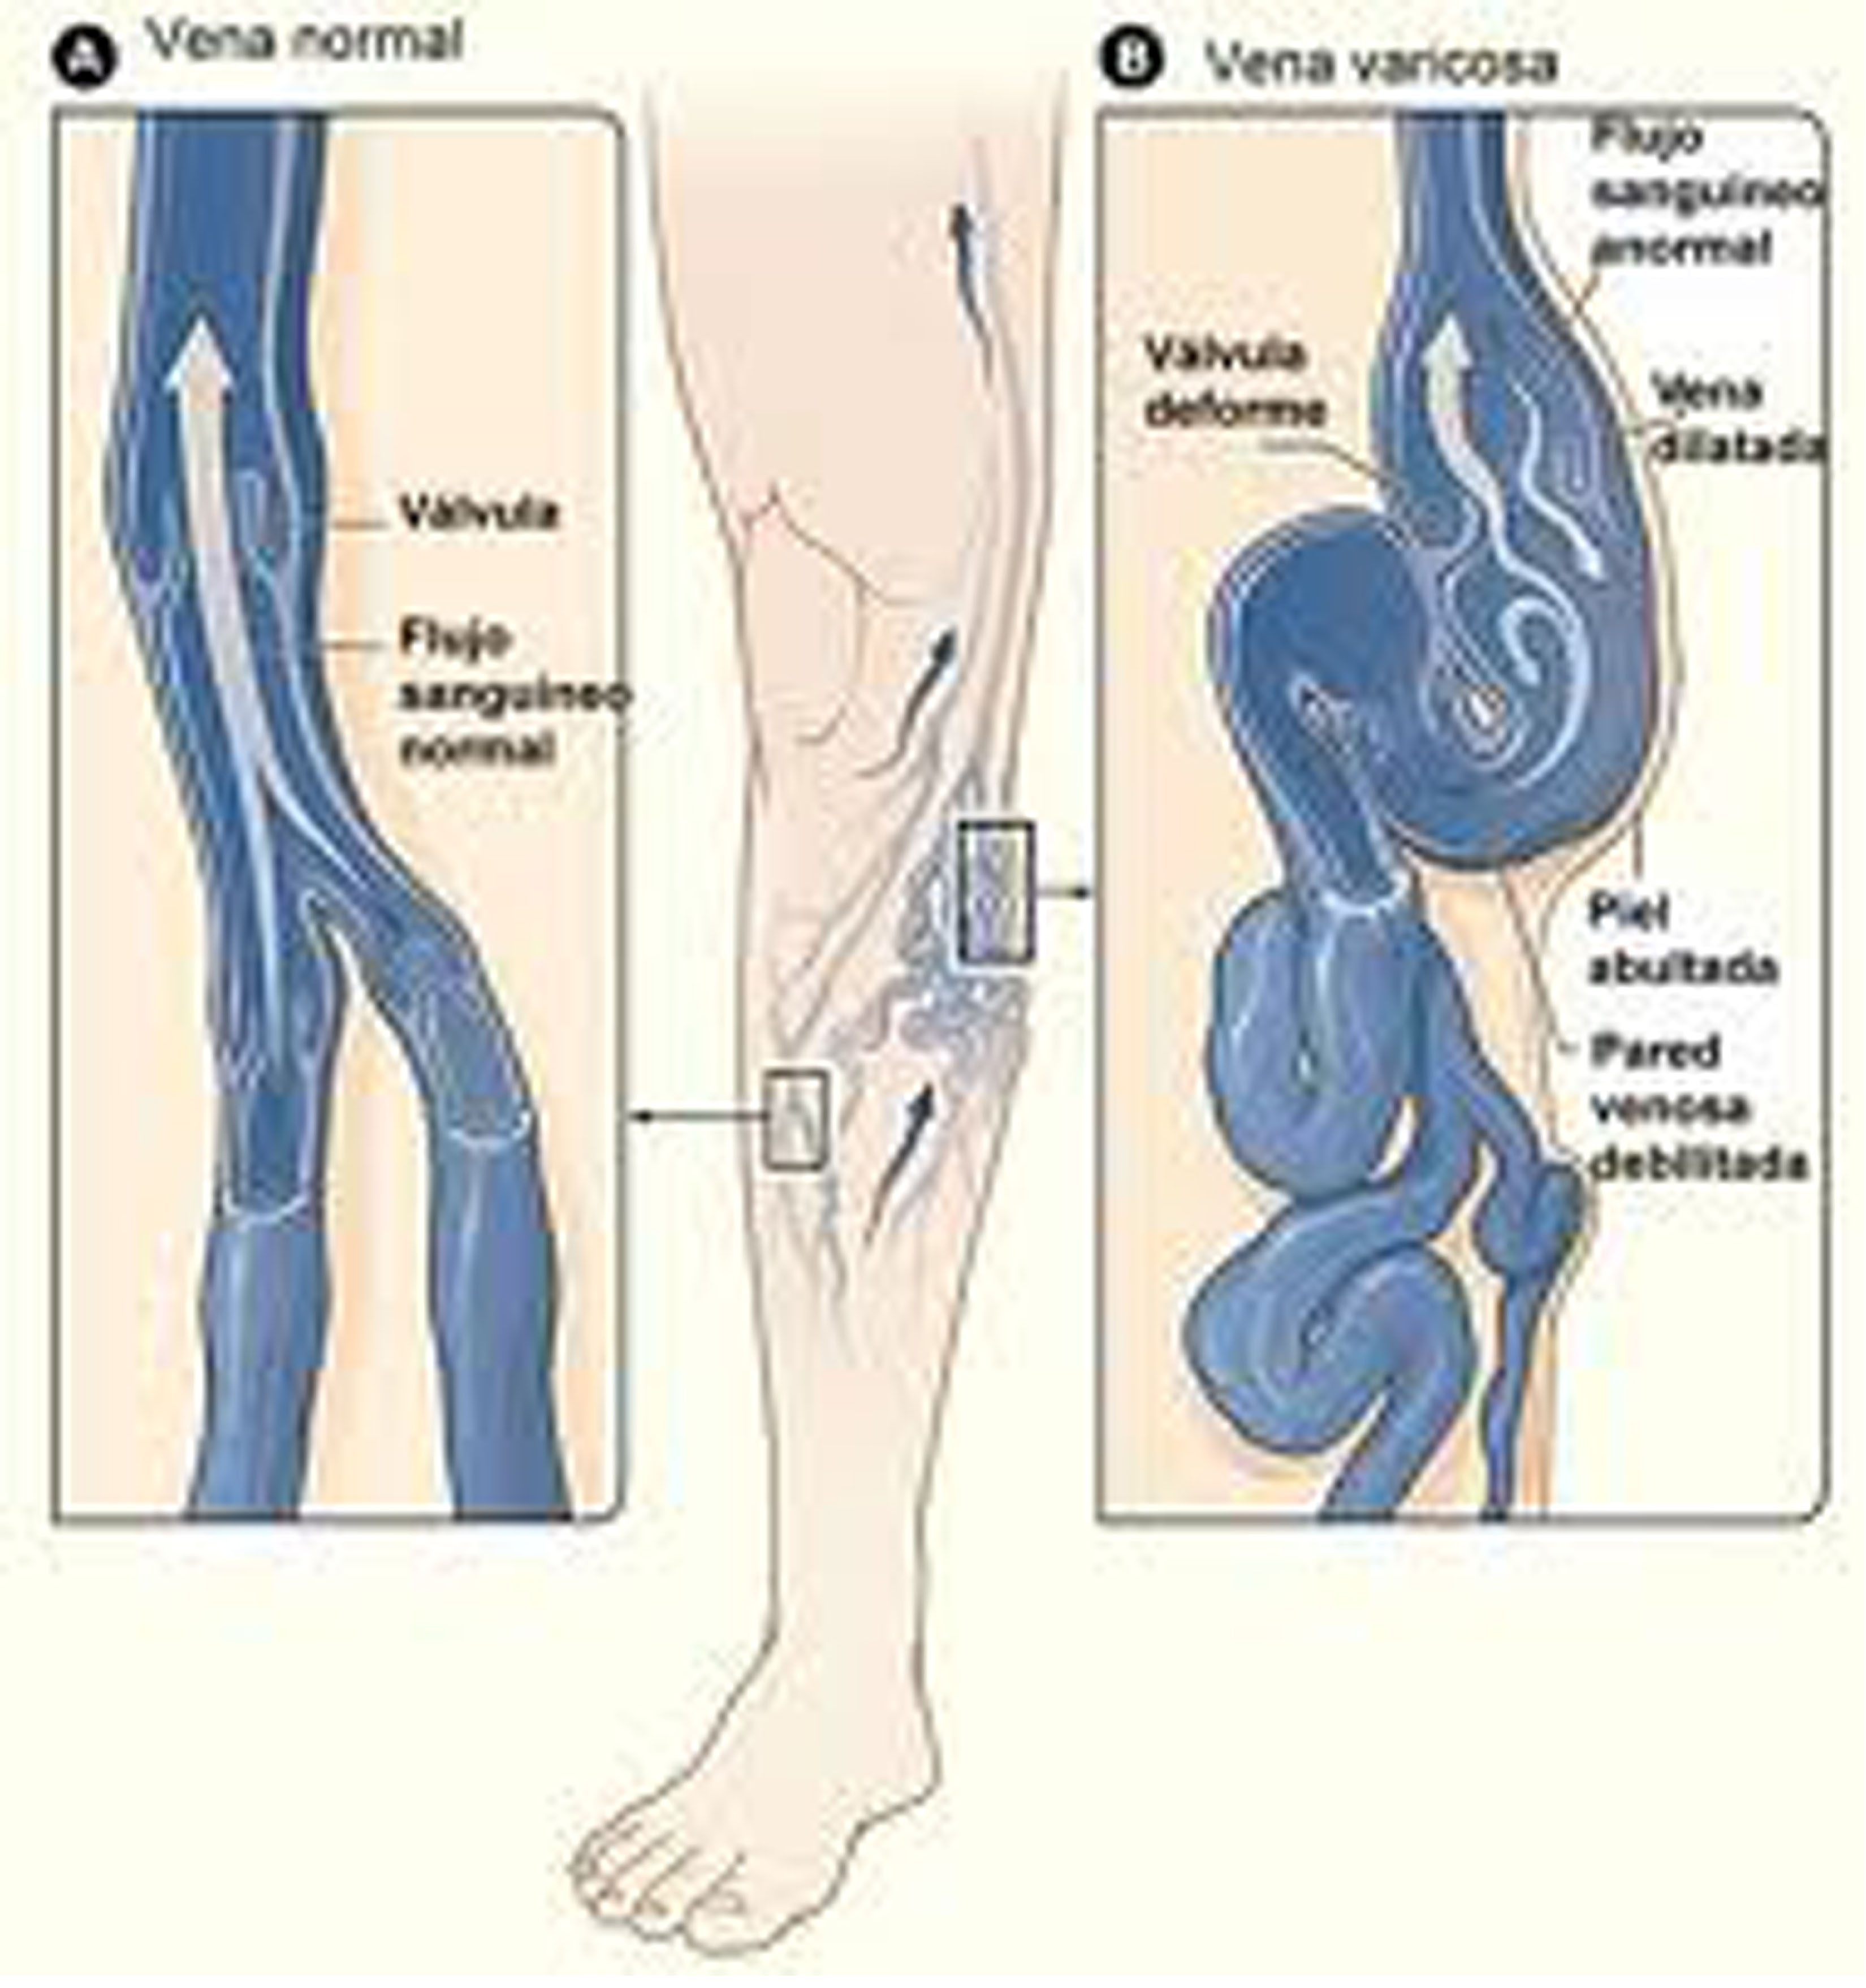 venele de post i varicoza edema picioare cu varicoza